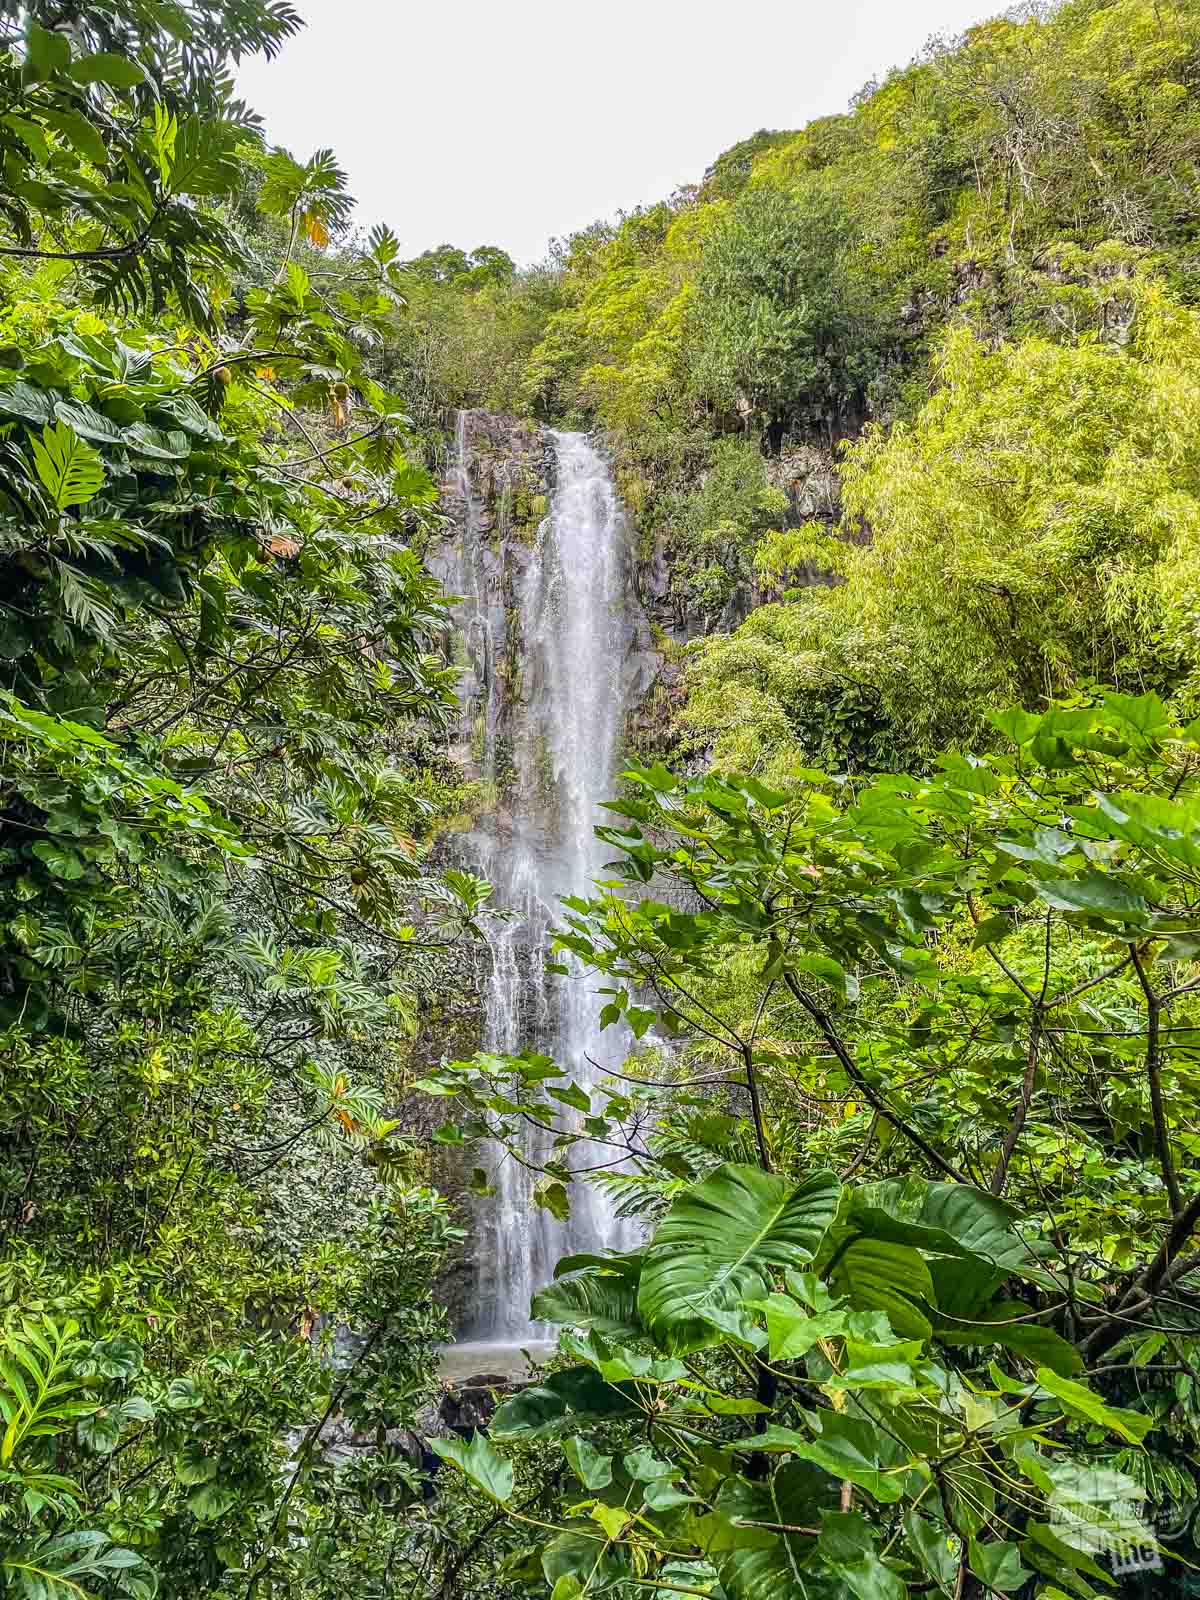 Wailua Falls along the road to Hana.